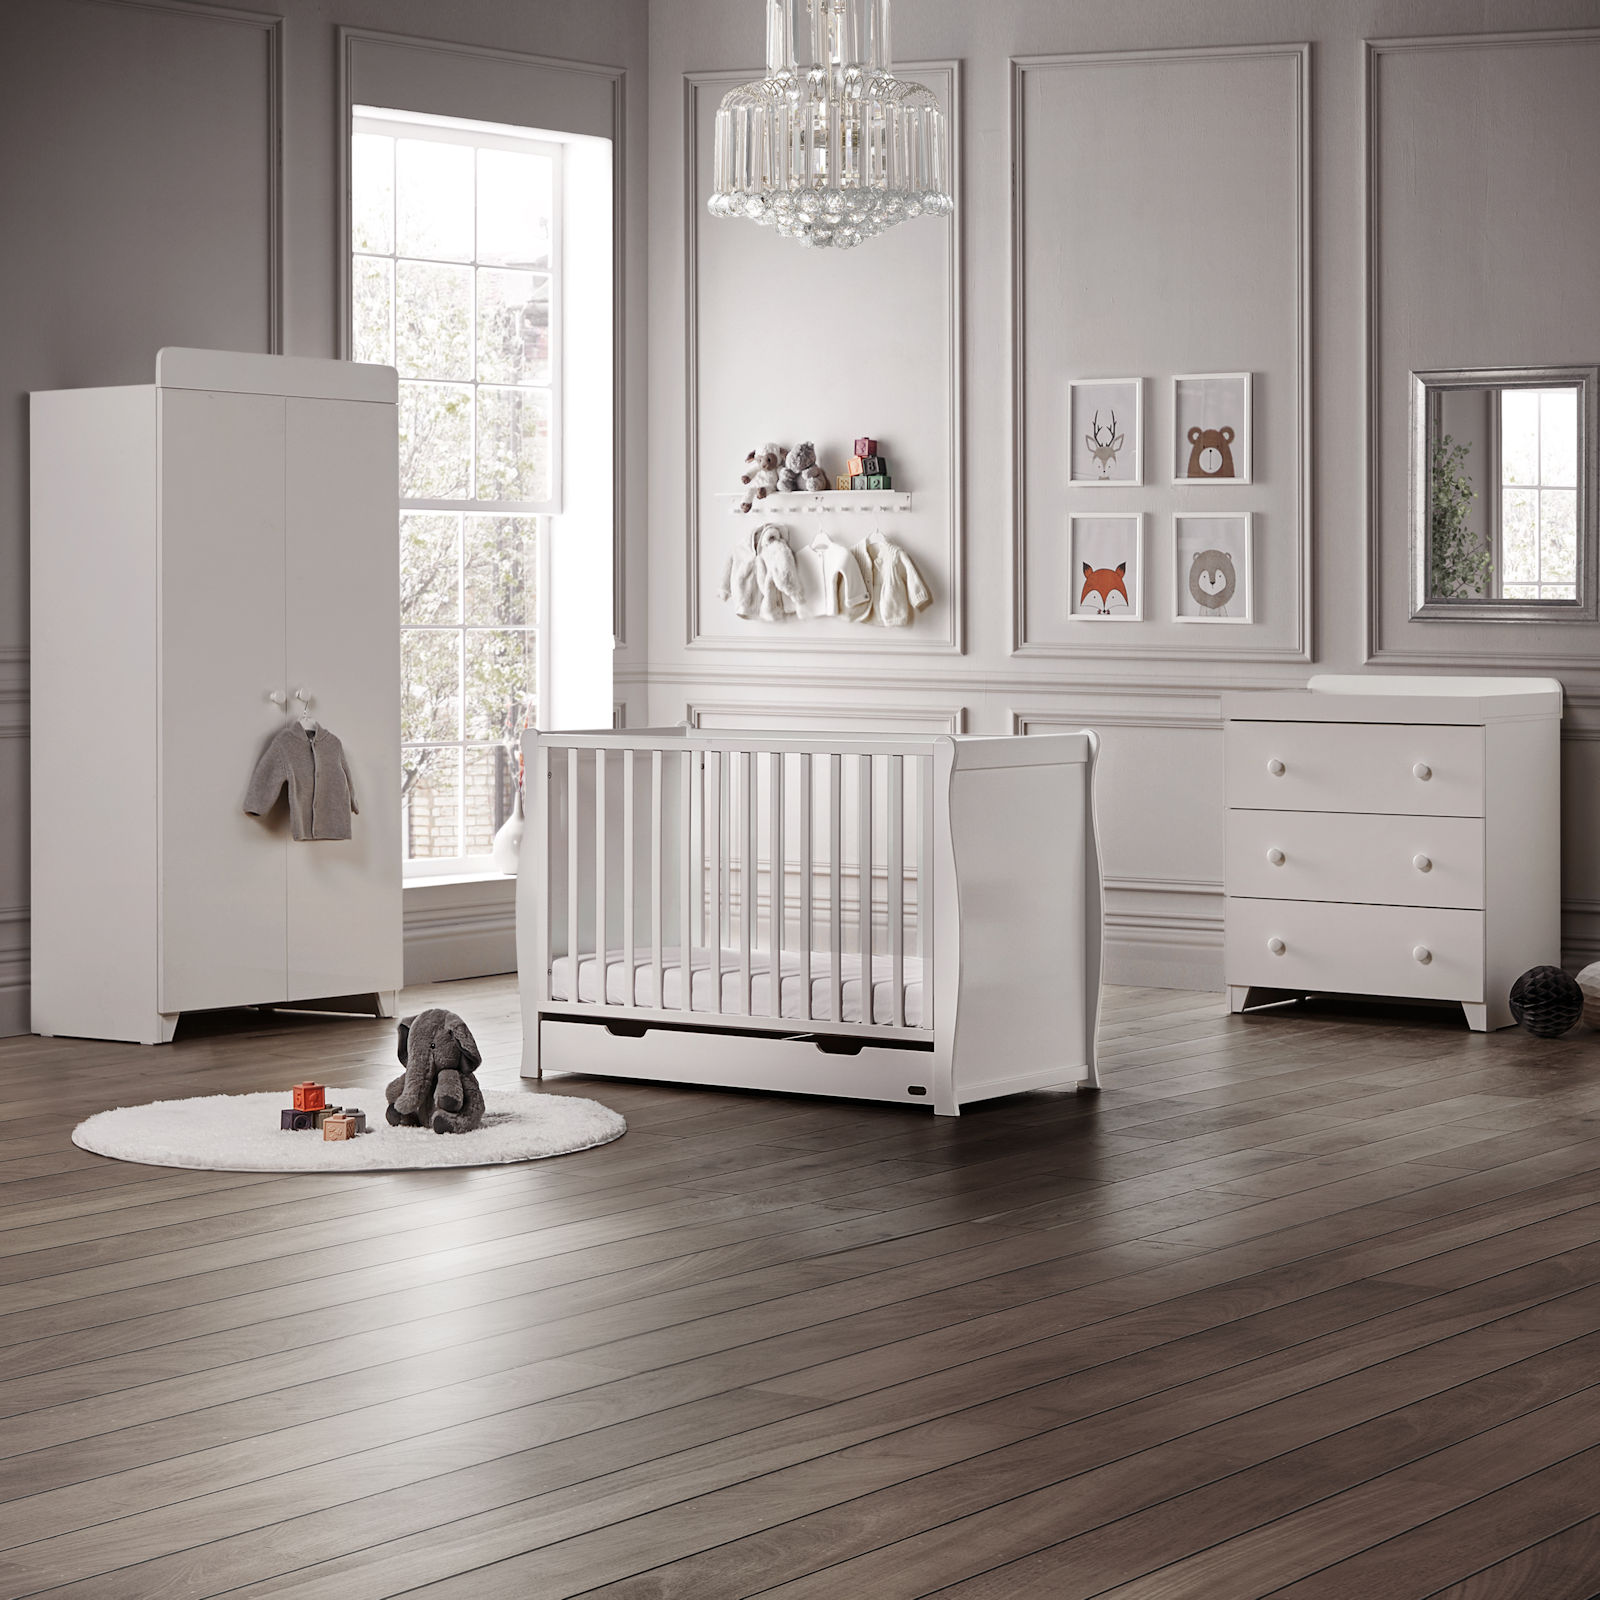 Puggle Sleigh Cot 6pc Nursery Furniture Set With Drawer & Maxi Air Cool Mattress - White